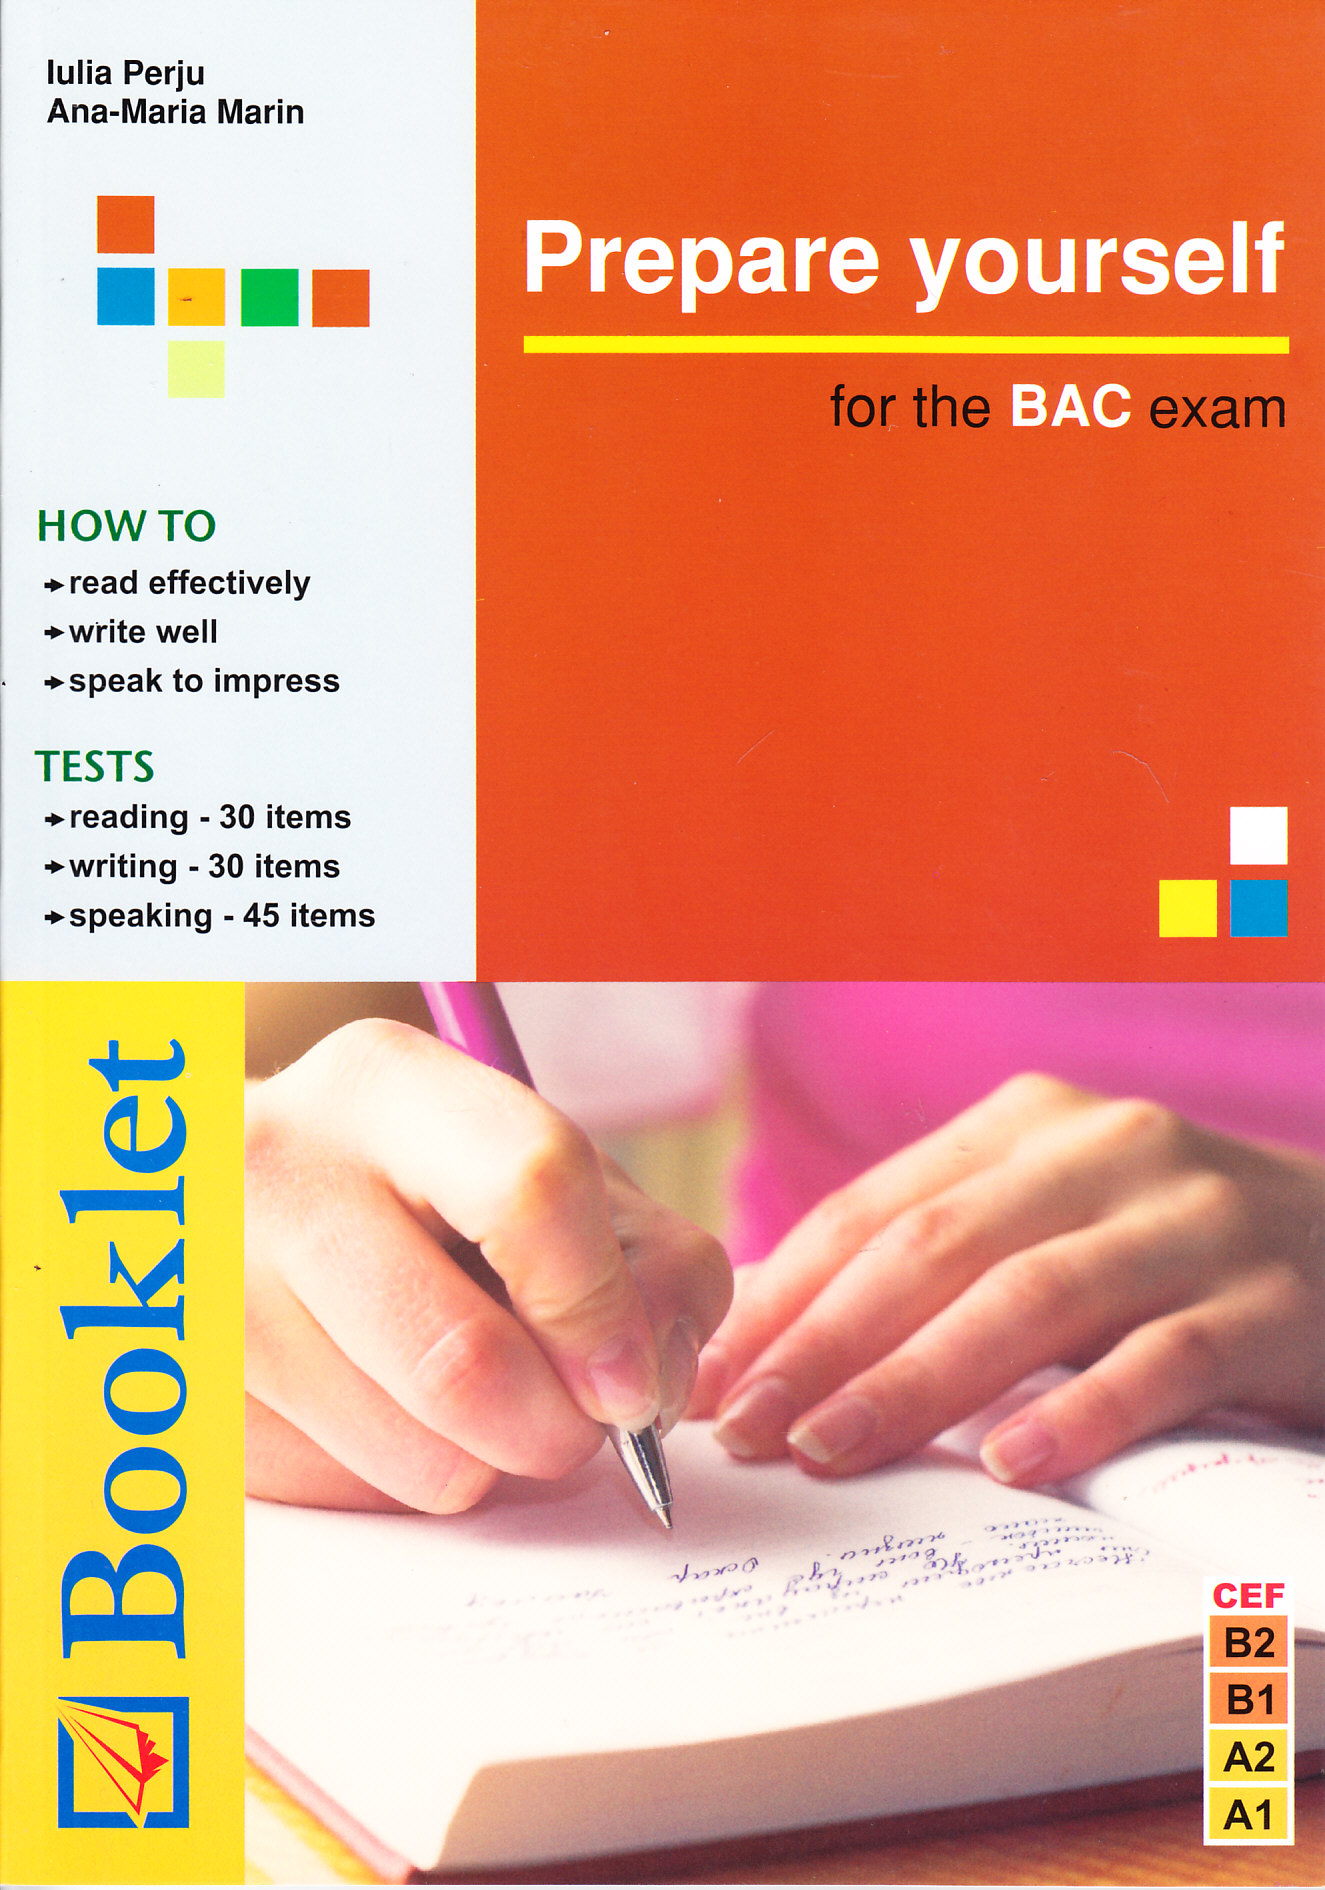 Prepare yourself for the Bac exam - Iulia Perju, Ana-Maria Marin